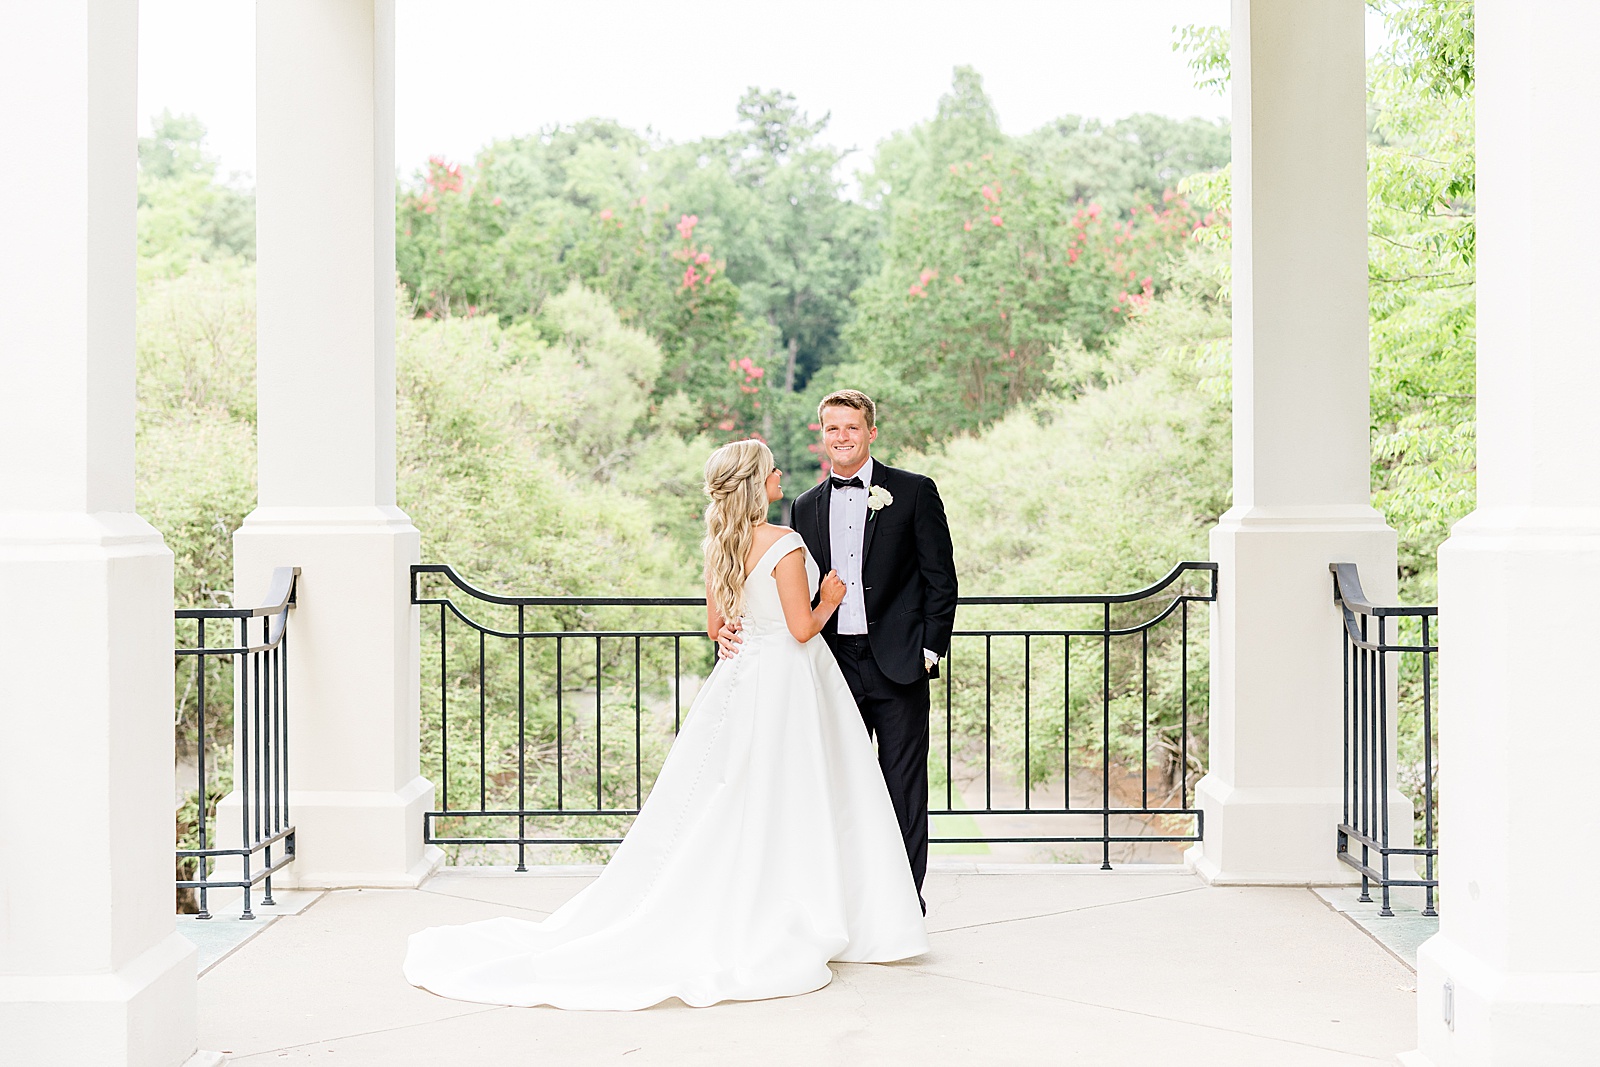 Payton & Brooks' B&A Warehouse Wedding in Birmingham, Alabama | Katie & Alec Photography